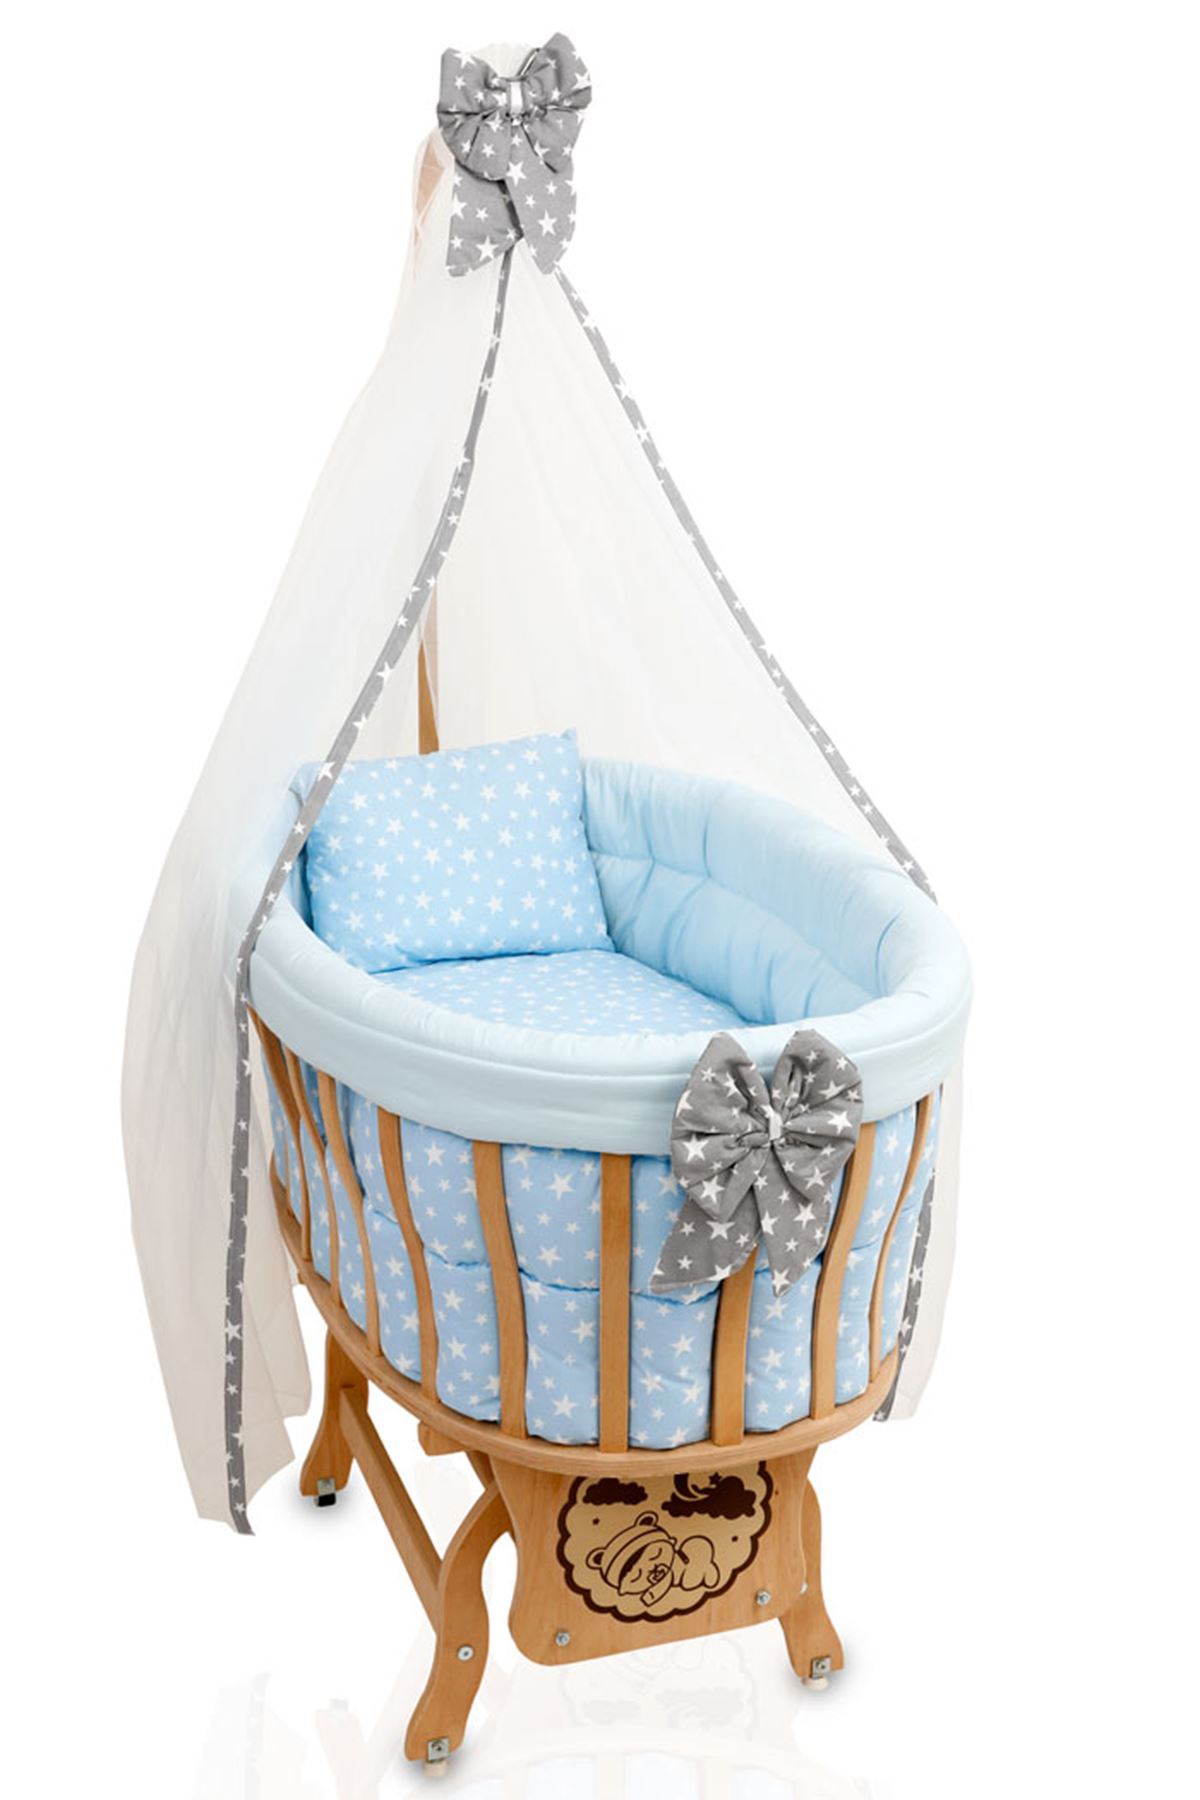 Wooden Basket Cradle "Blue Star" Sleeping Set